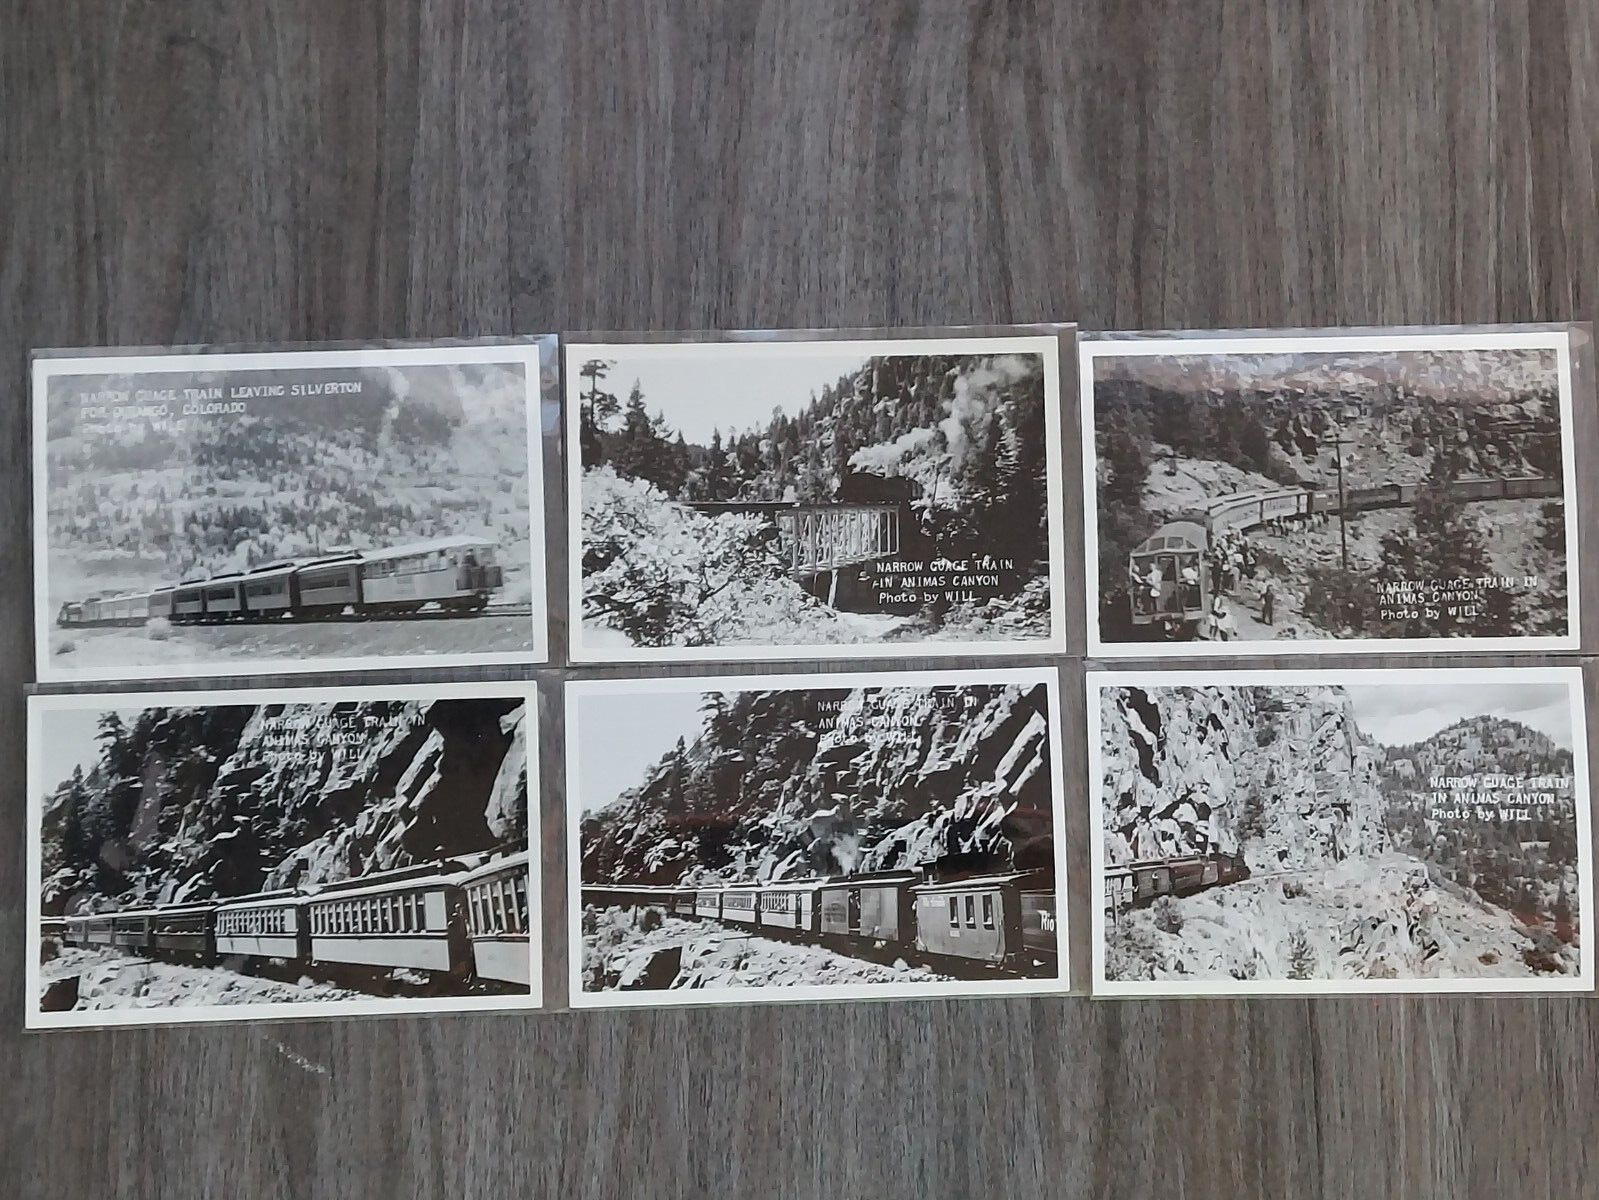 Durango Railroad,Silverton Train,Rio Grande,Narrow Gauge,Photo Postcards,drgw